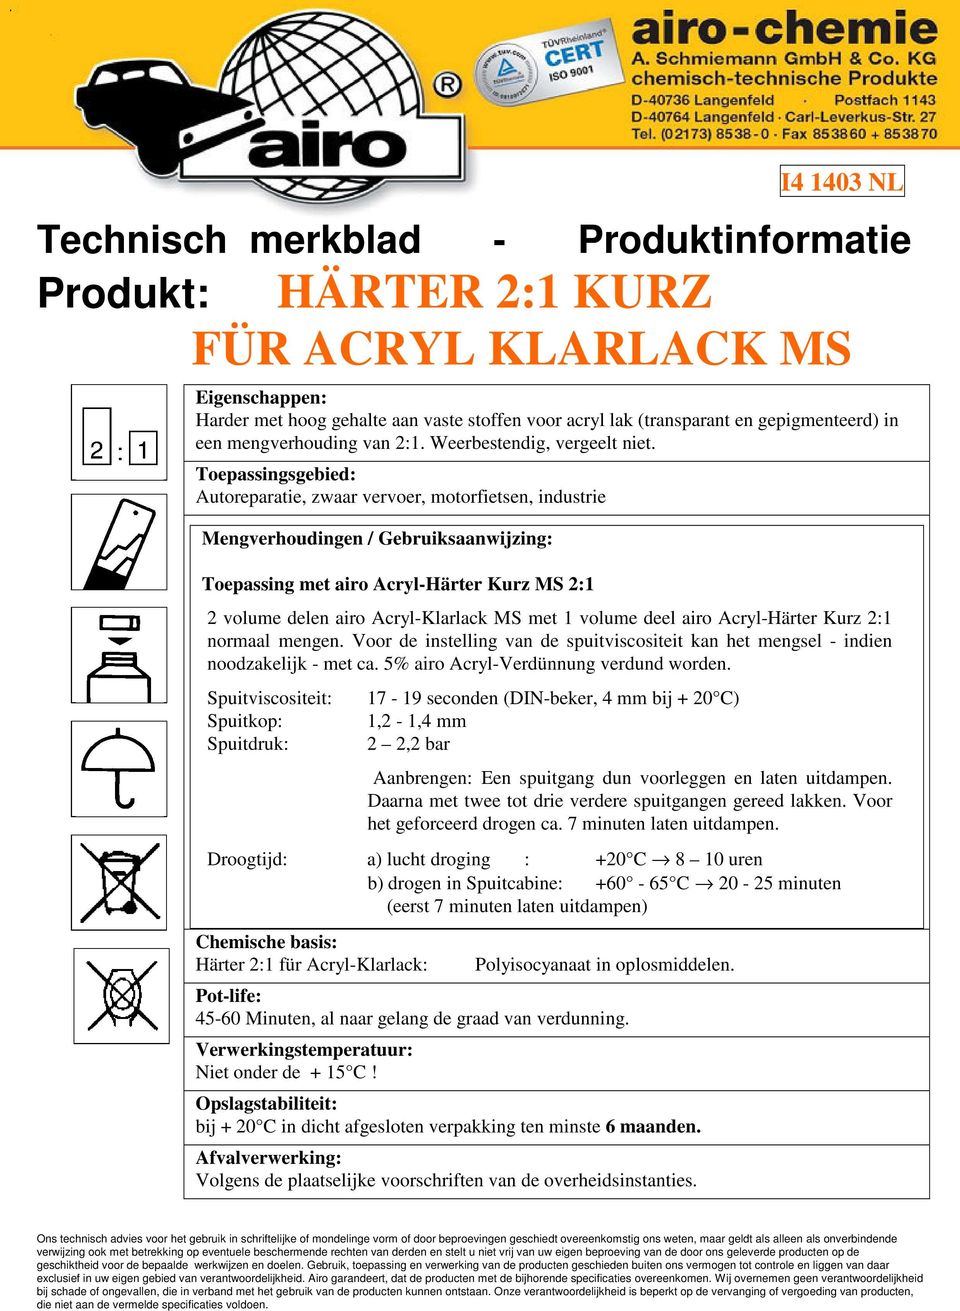 Toepassing met airo Acryl-Härter Kurz MS 2:1 2 volume delen airo Acryl-Klarlack MS met 1 volume deel airo Acryl-Härter Kurz 2:1 normaal mengen.